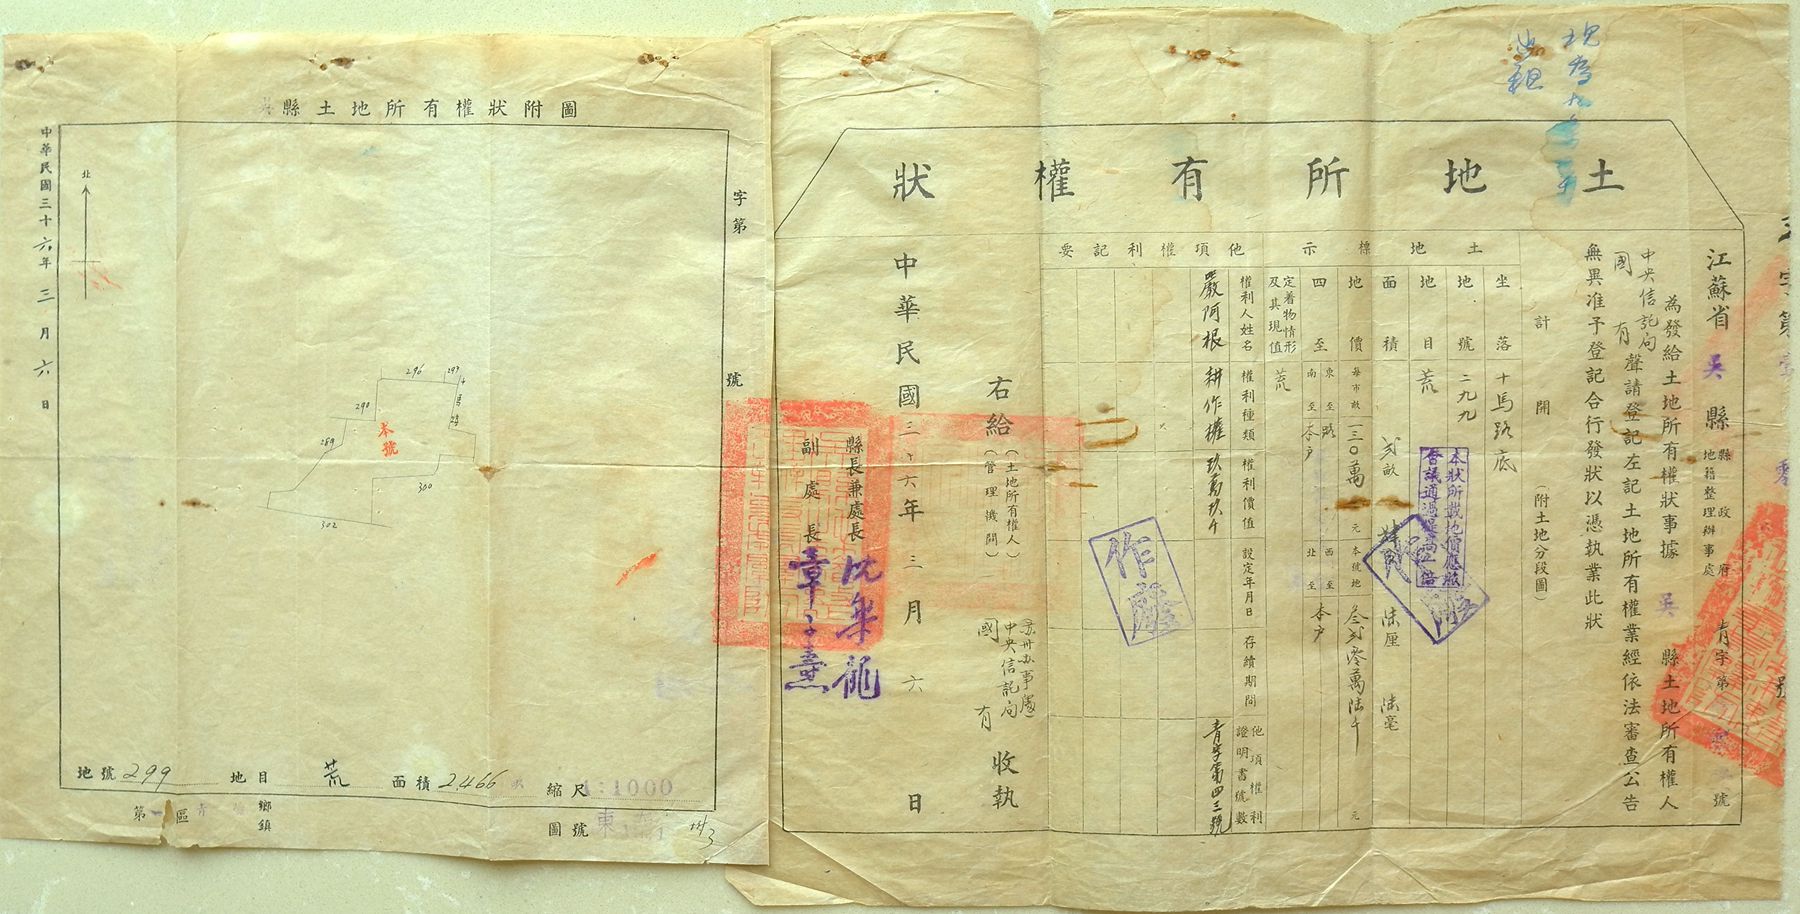 D4066, Land Deed Licence of Jiangsu Province, Wu County, China 1947